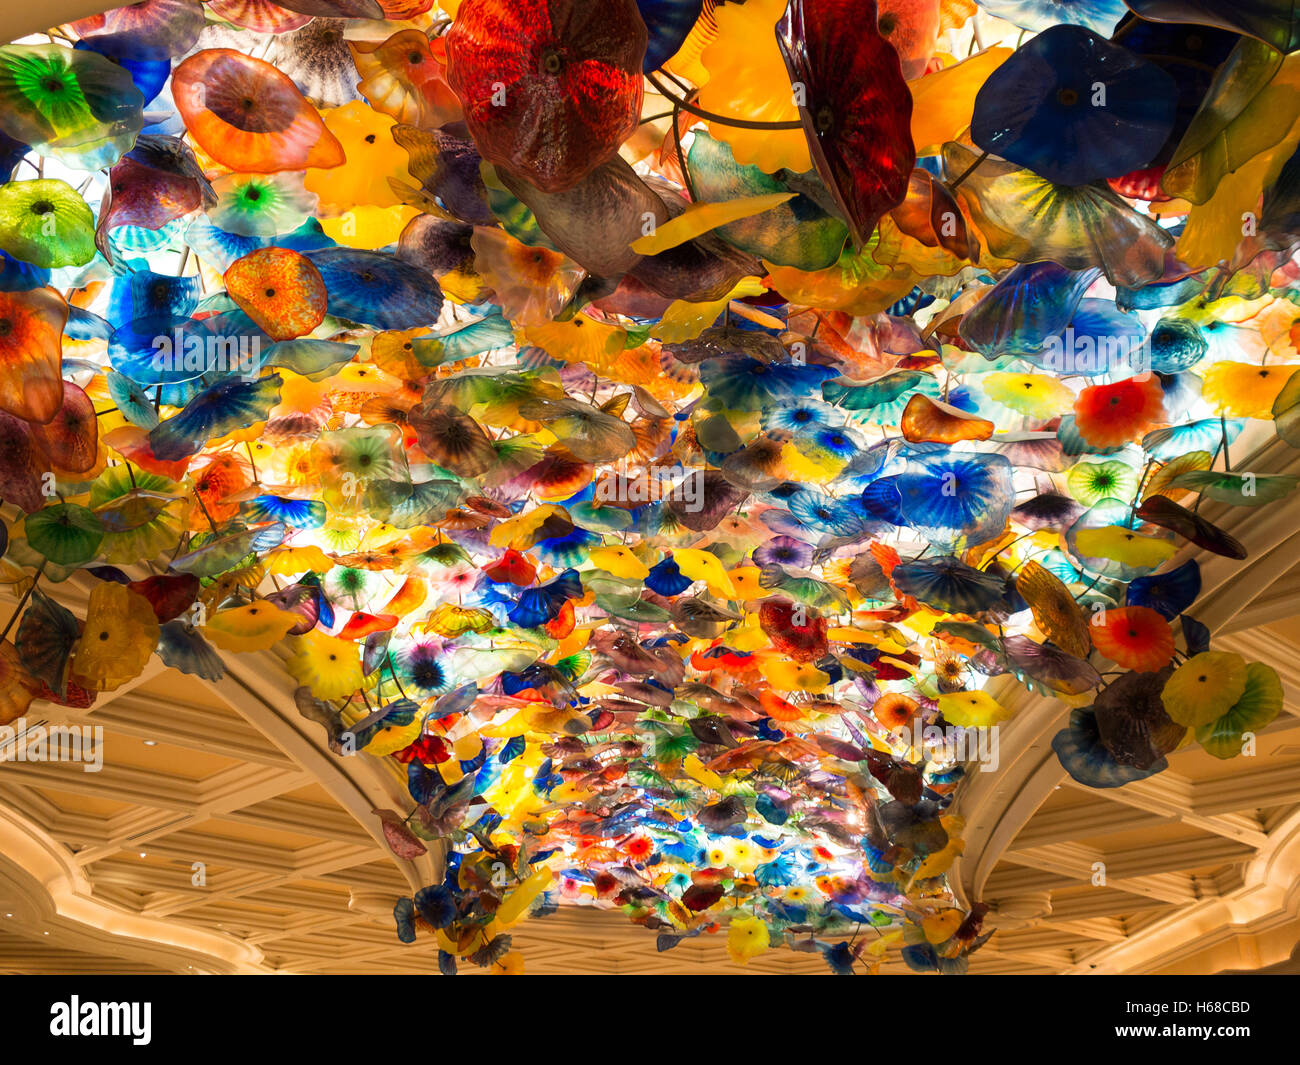 Bellagio Hotel and Casino lobby ceiling glass decor Stock Photo